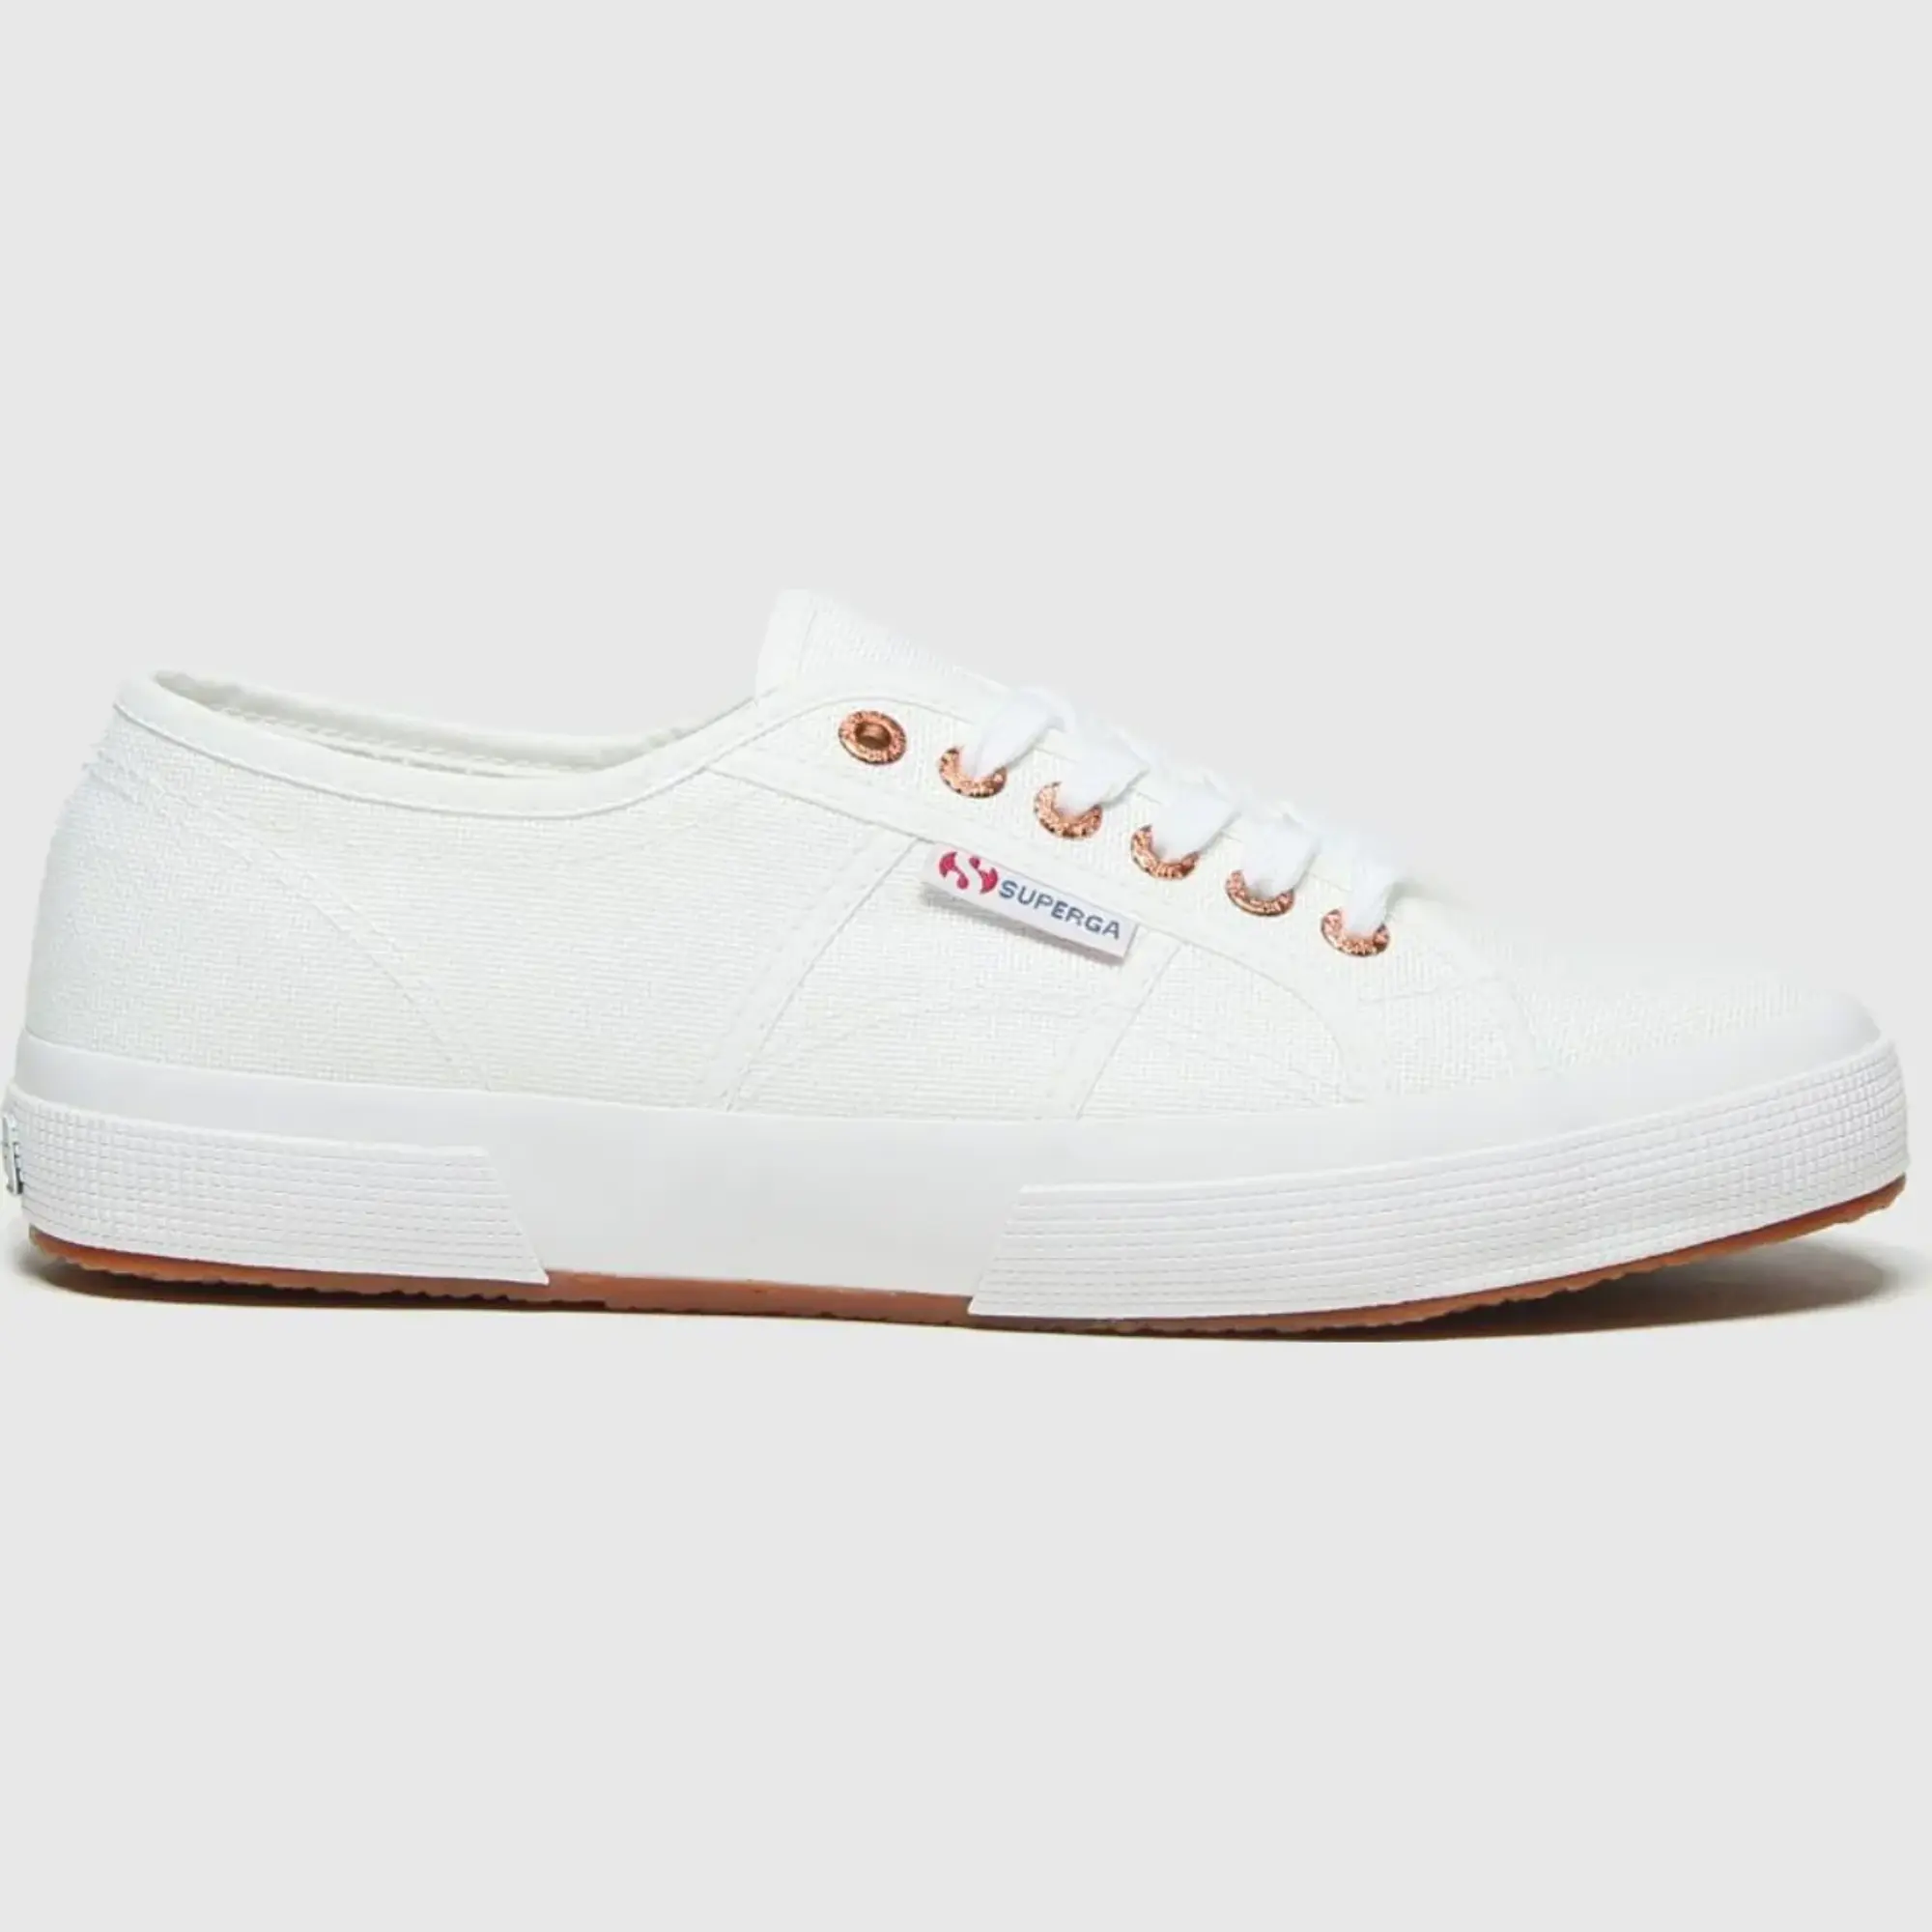 Superga 2750 cotu classic trainers in white